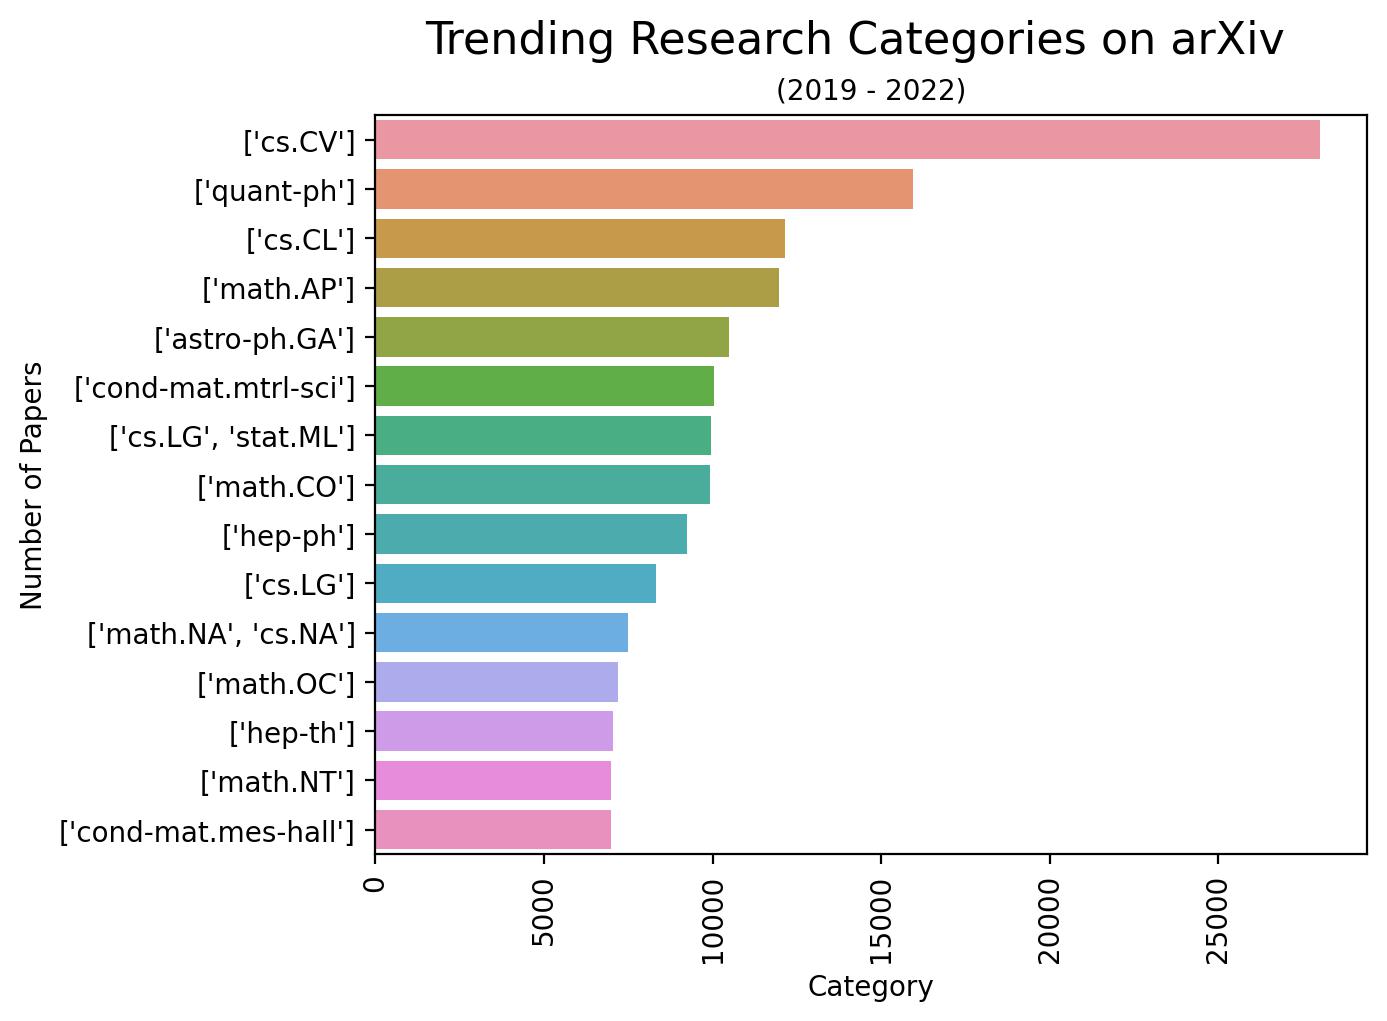 Trending Research Categories on arXiv (2019-2022).jpg